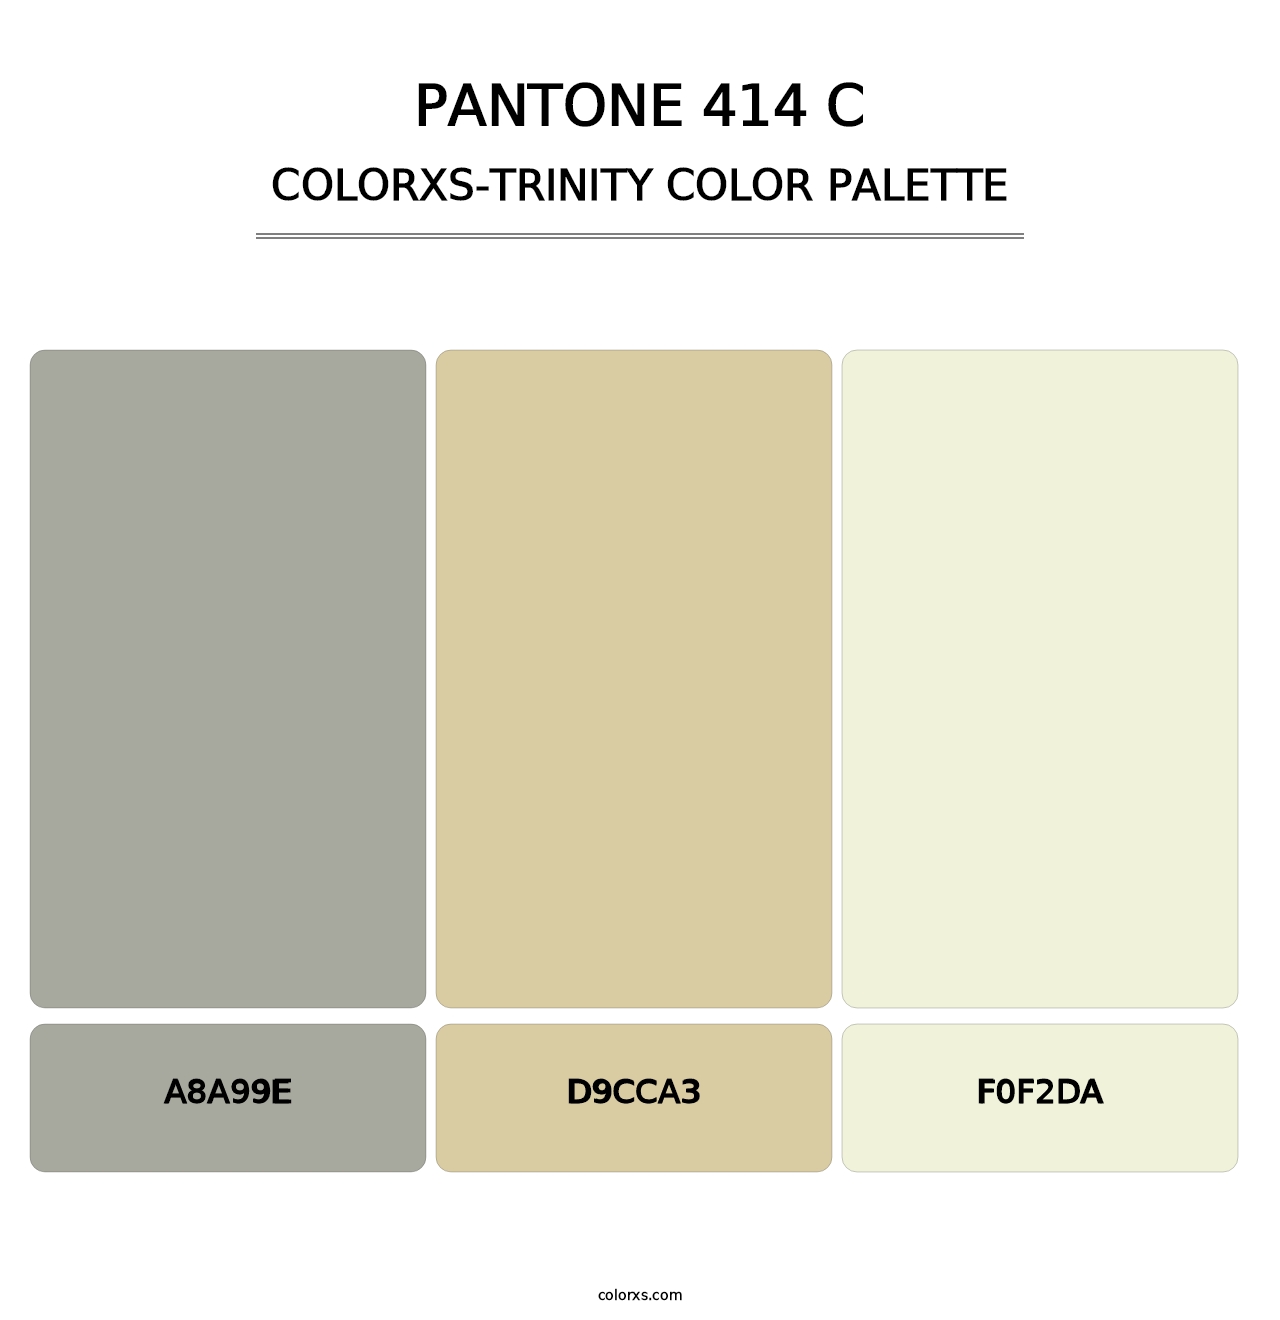 PANTONE 414 C - Colorxs Trinity Palette